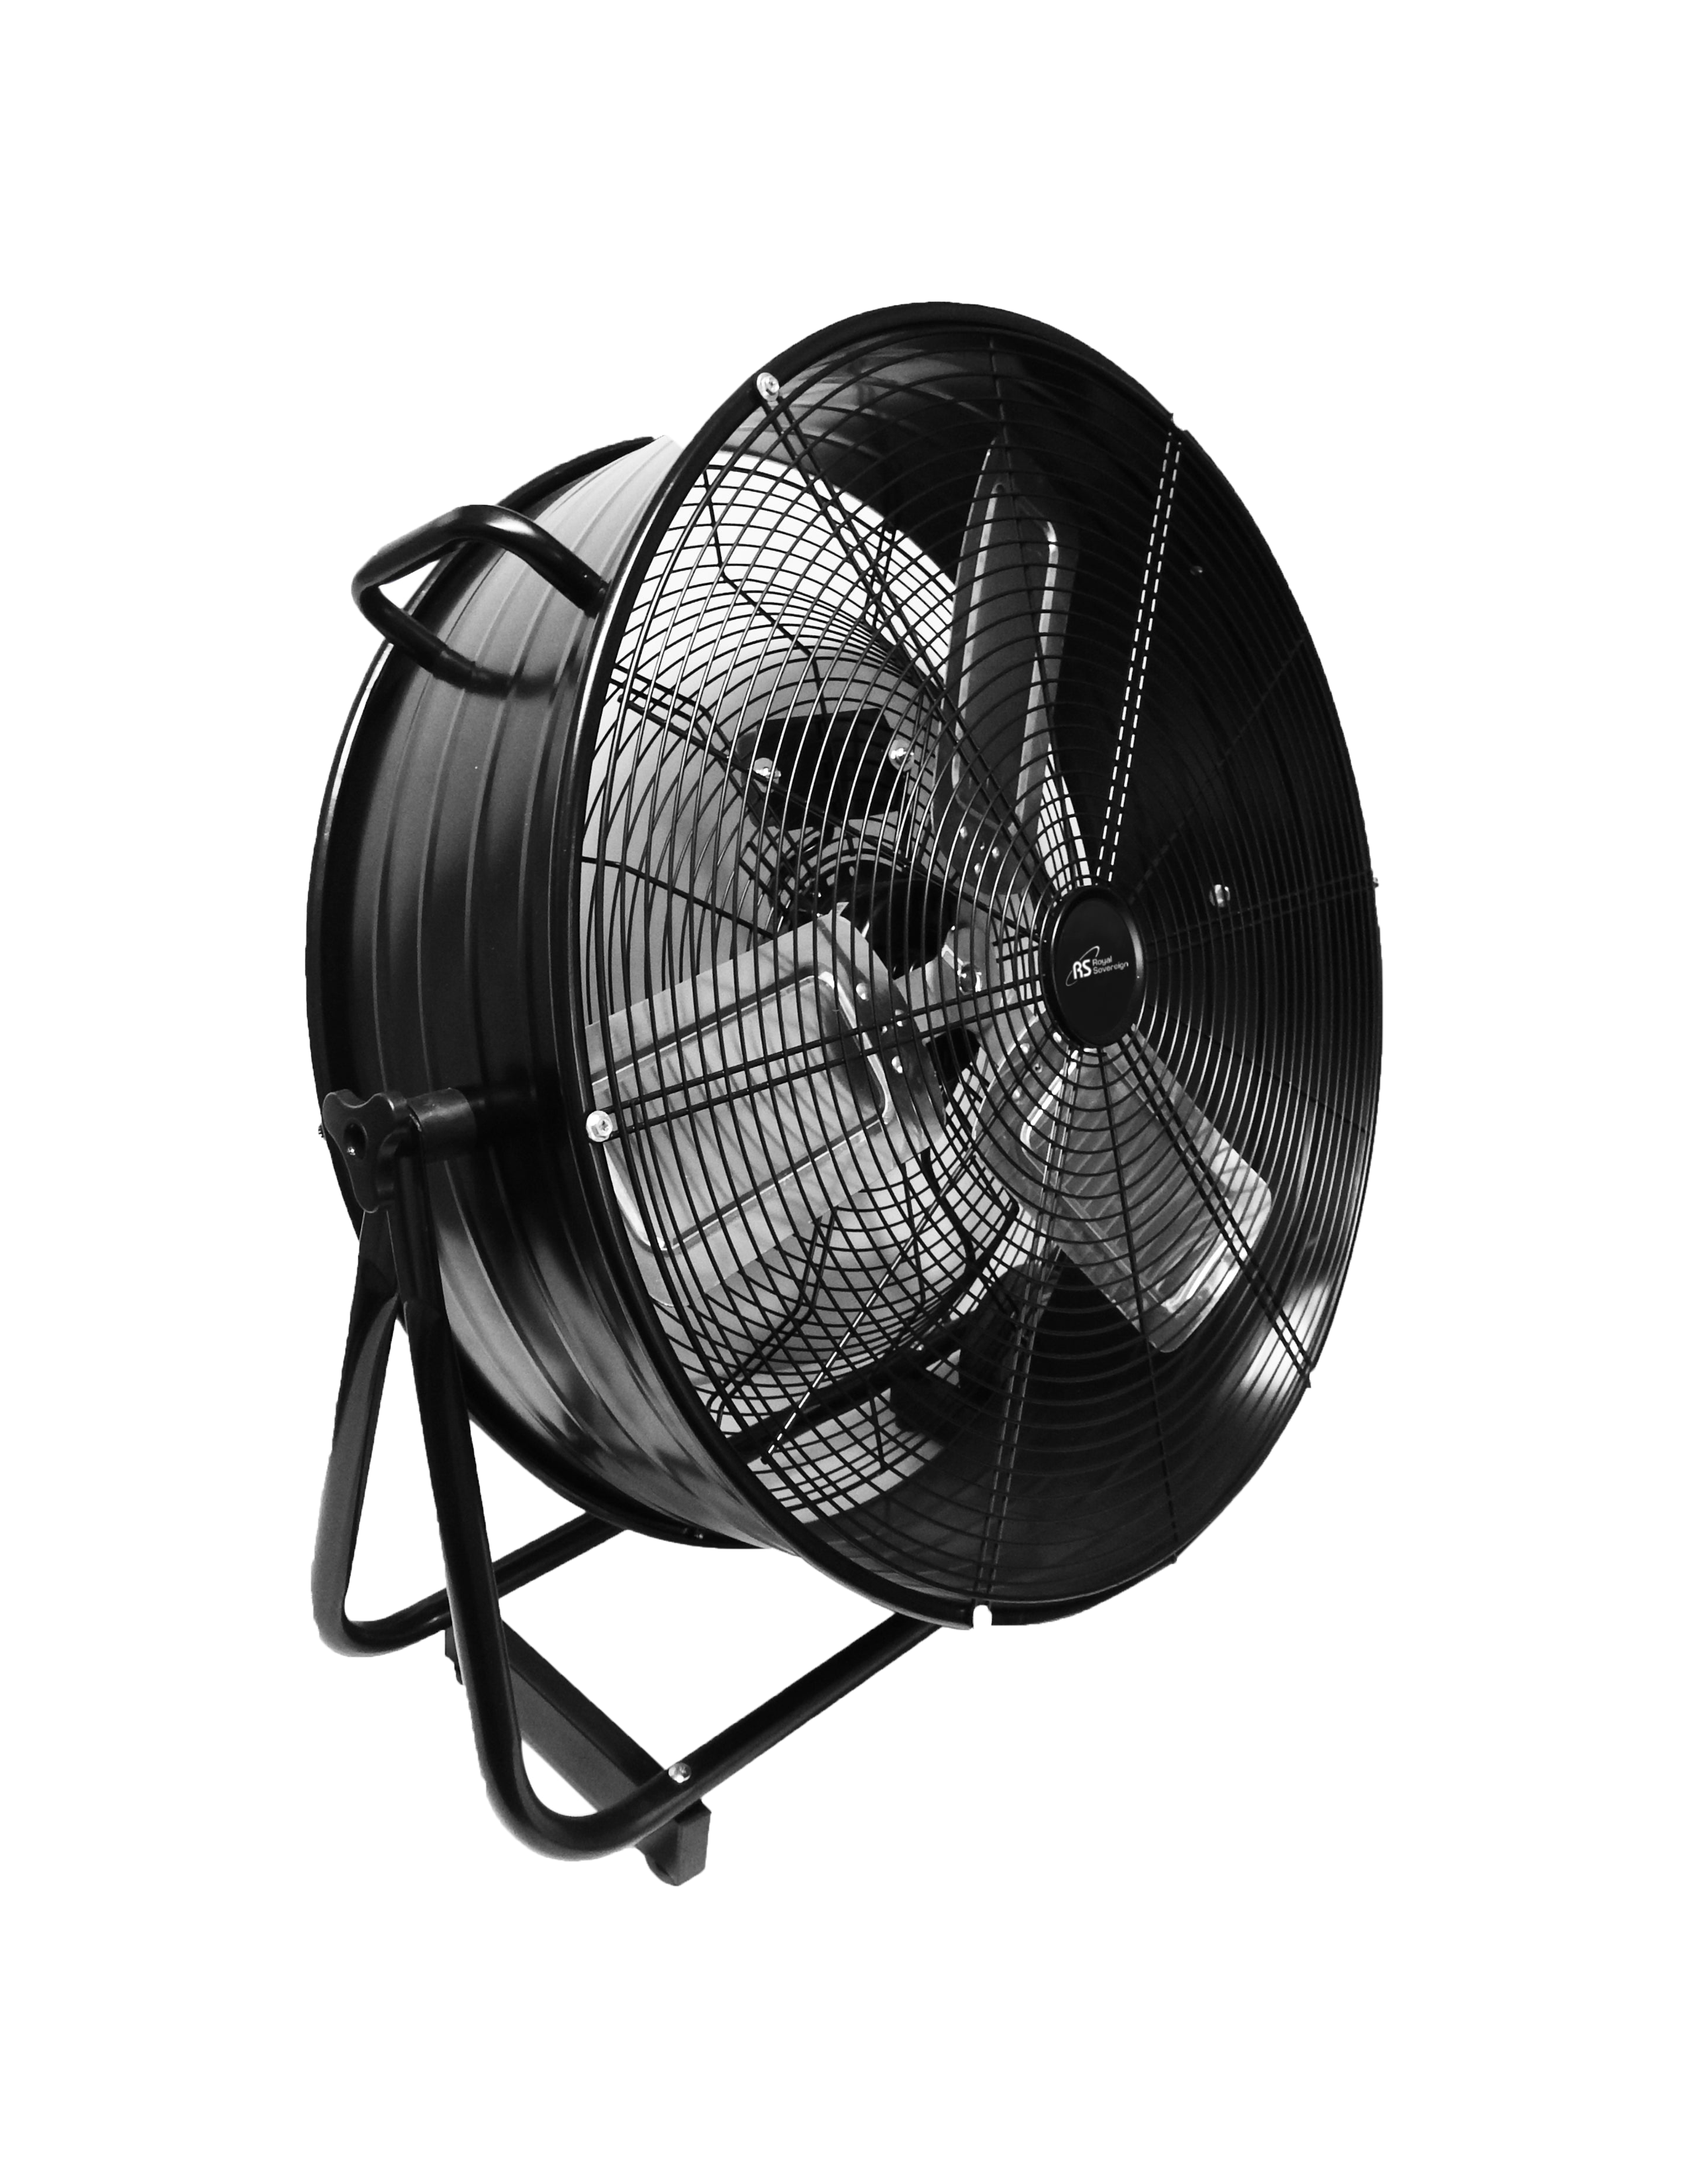 RACC-HV24SE/ 24” High Velocity Drum Fan, 7855 CFM